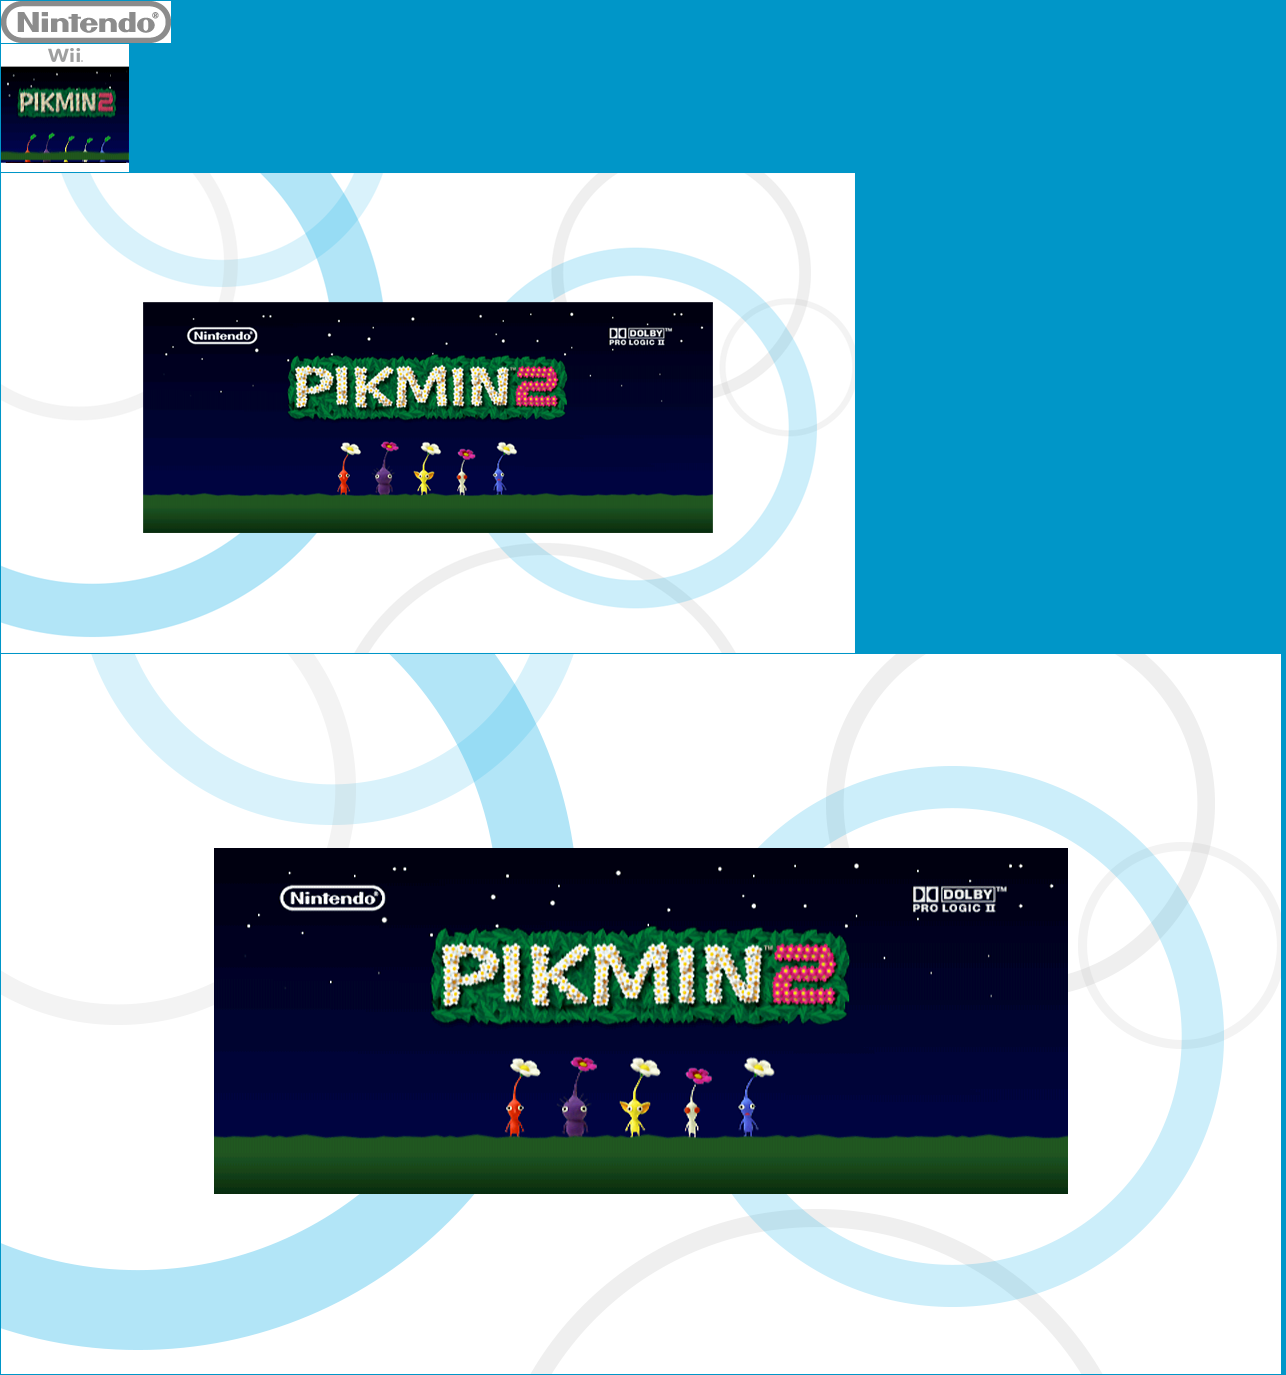 Virtual Console - PIKMIN 2